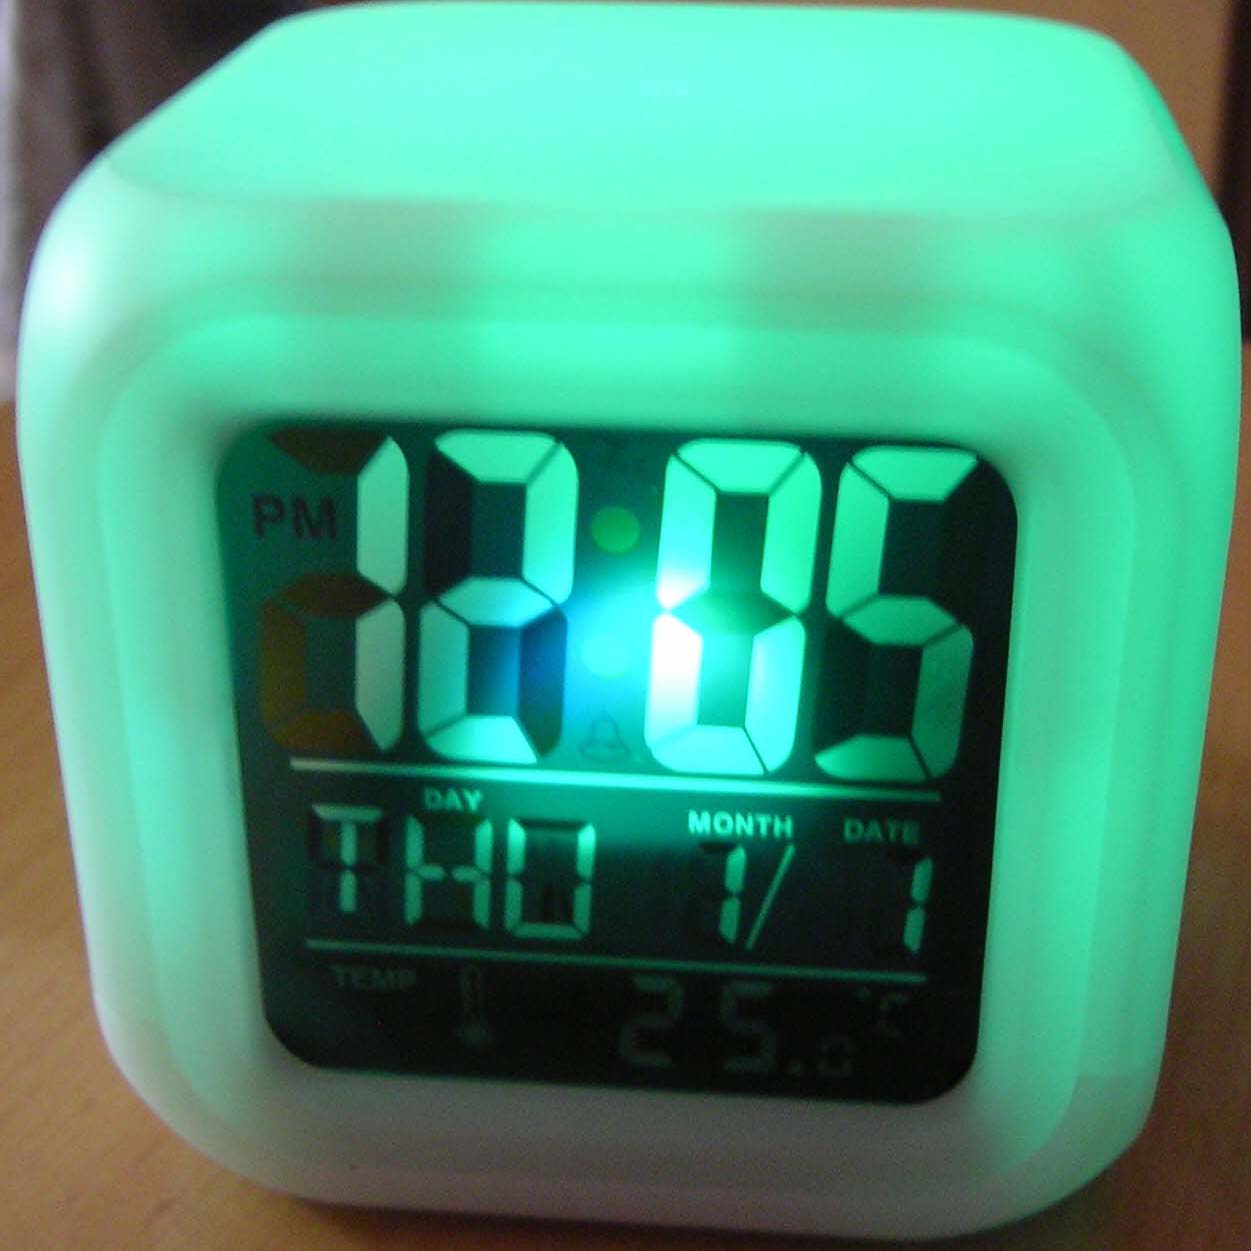  Color Change Clock (Изменение цвета часы)